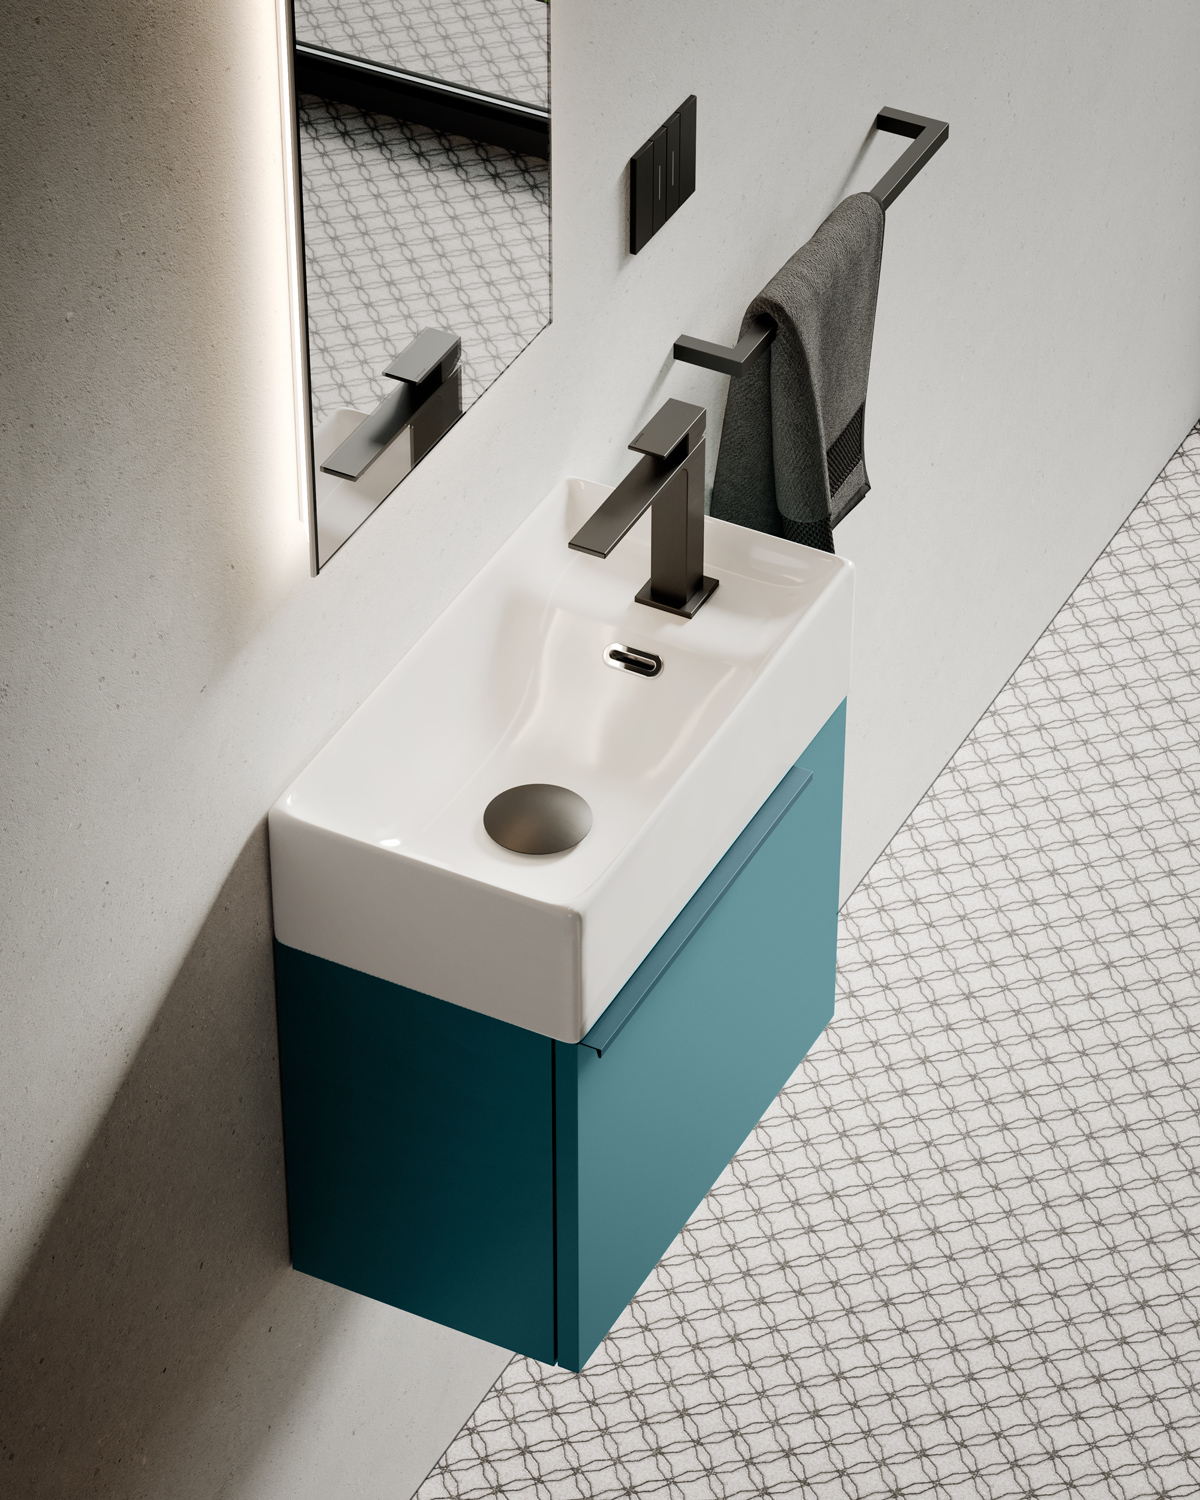 Mini) lavabi e (mini) mobili da bagno per mini spazi - Ideagroup Blog